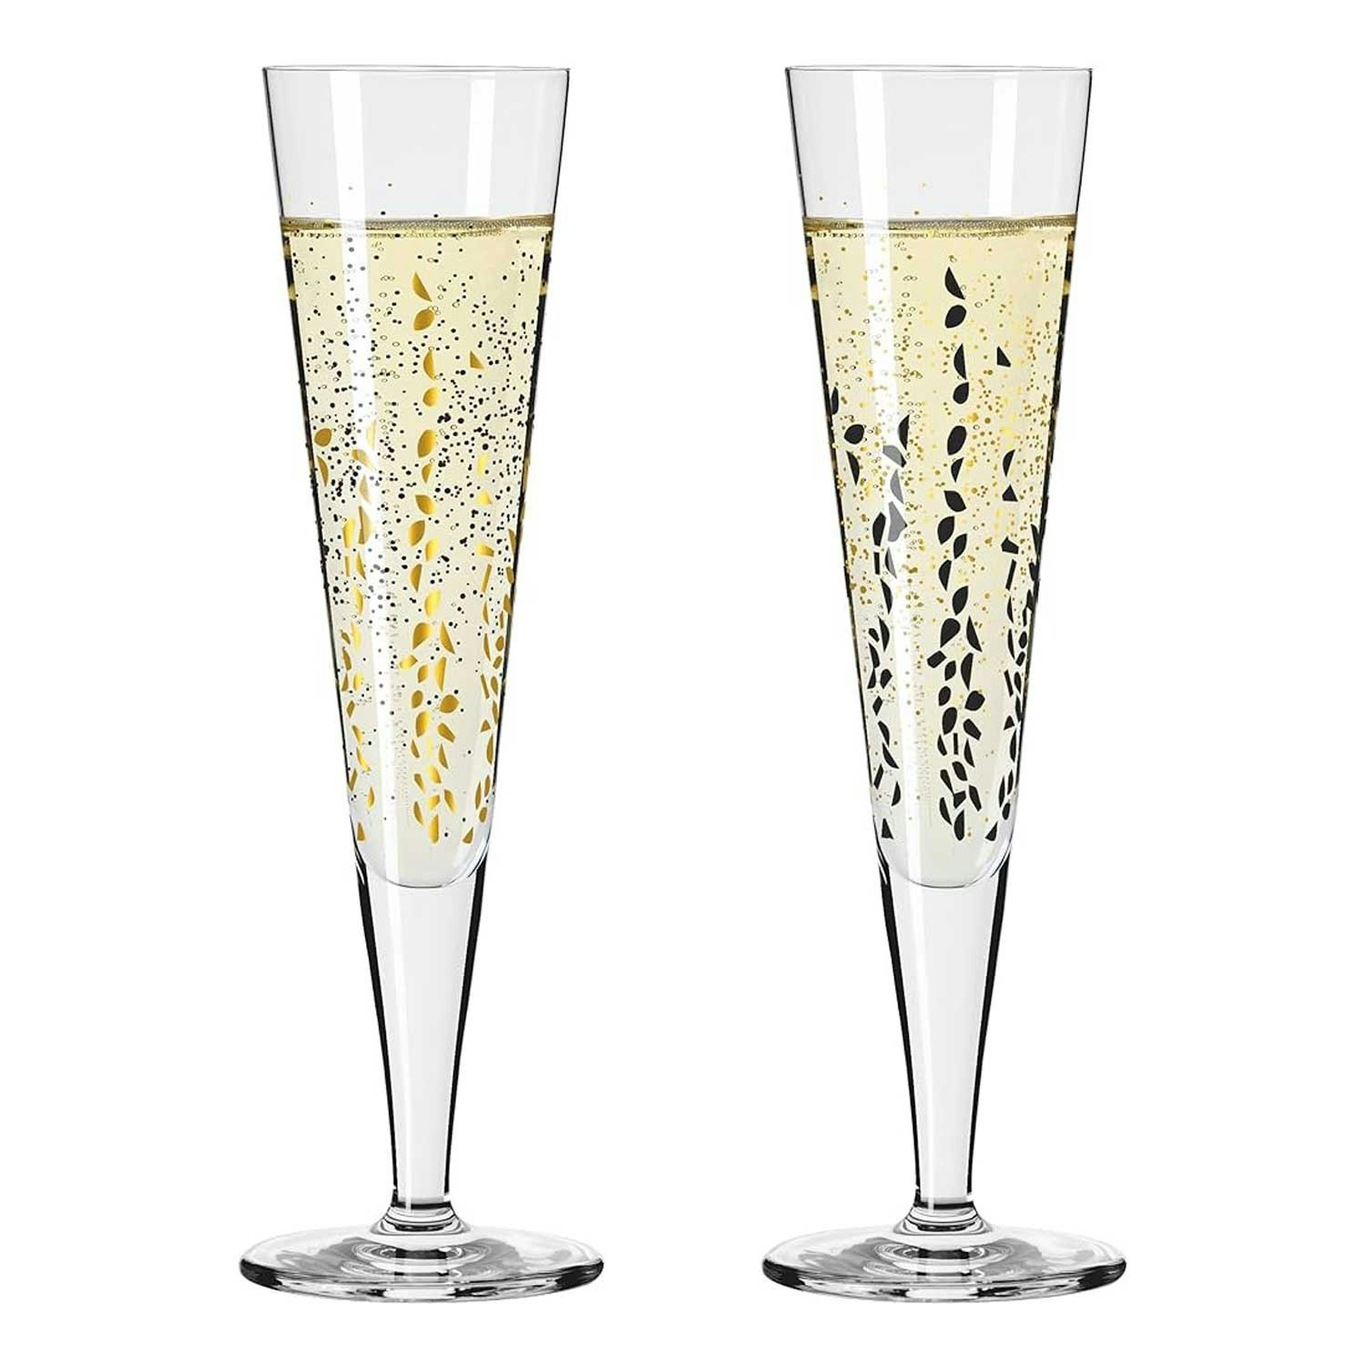 Goldnacht Champagne Glasses 2-pack, H22